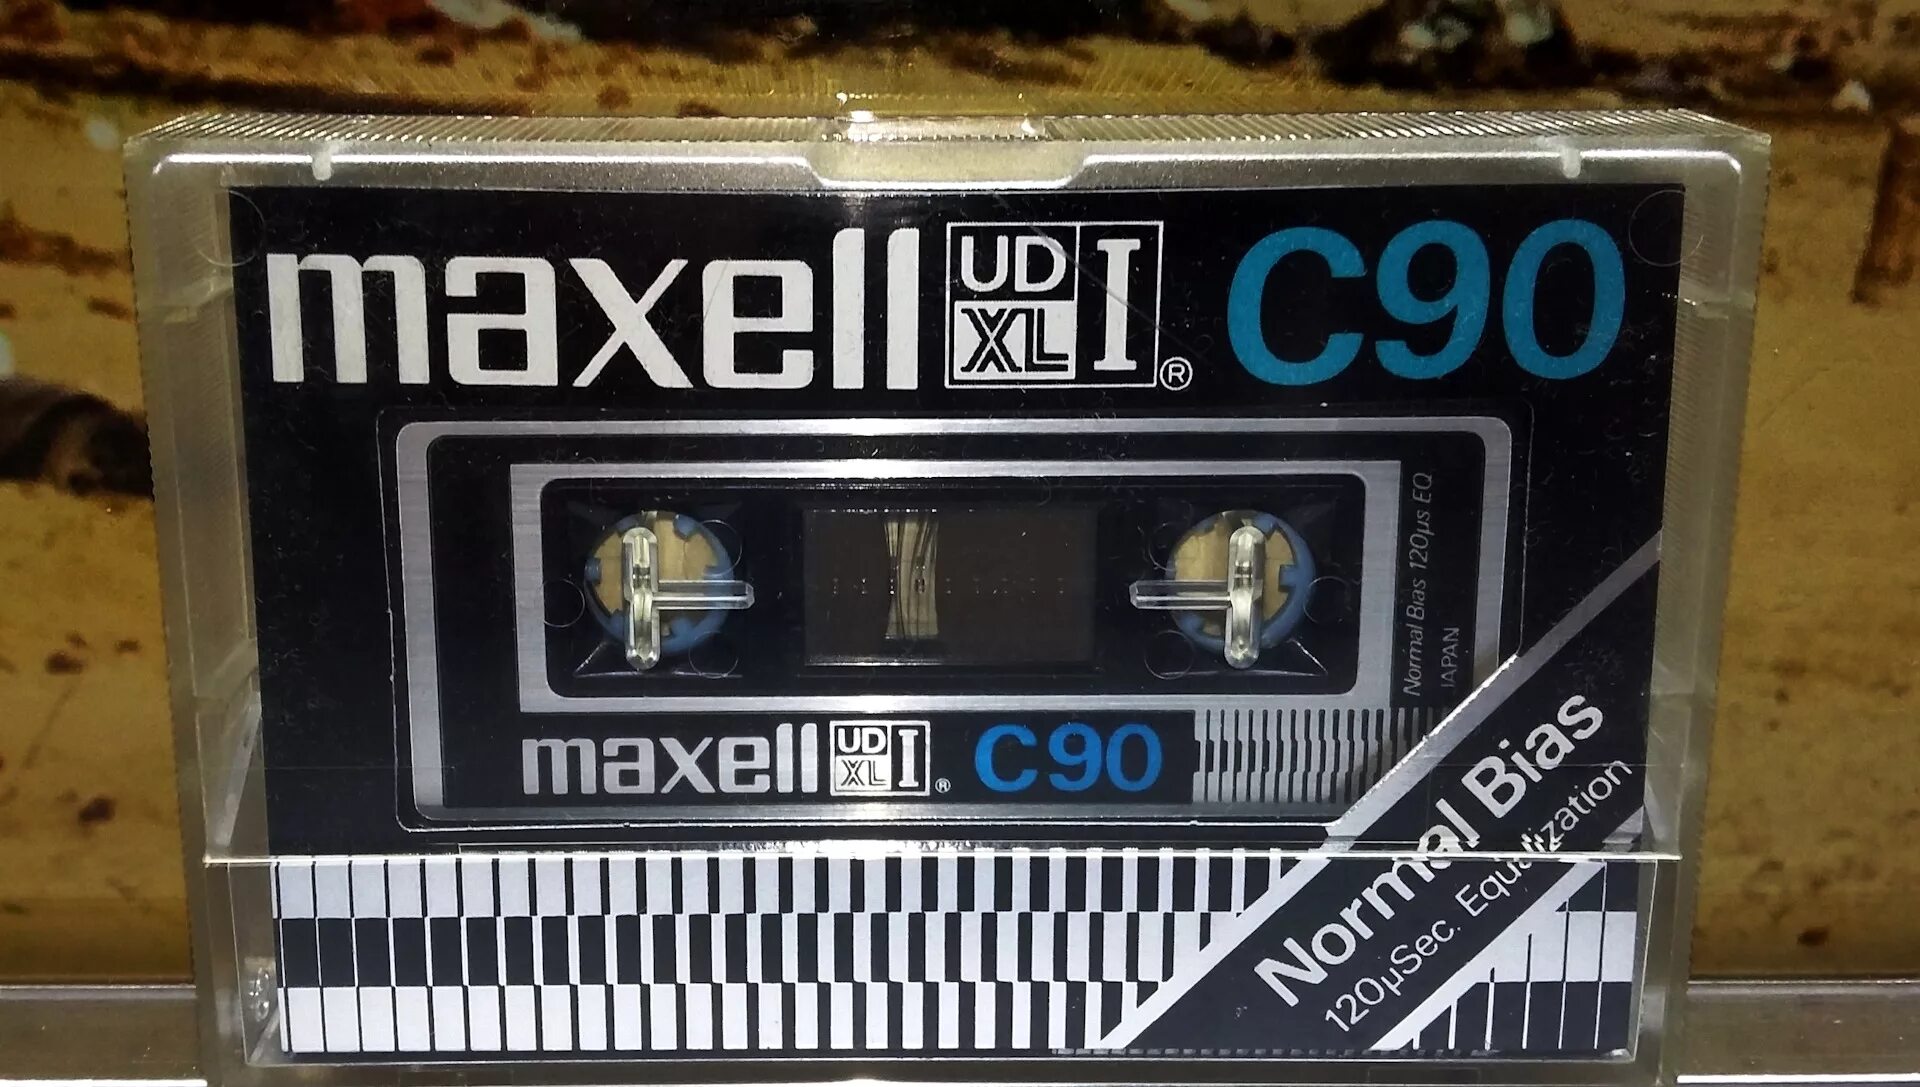 90 78. Аудиокассеты Максел c90. Аудиокассета Maxell XLII 90. Кассета Maxell Ln c90. Maxell us II 90 вкладыш.